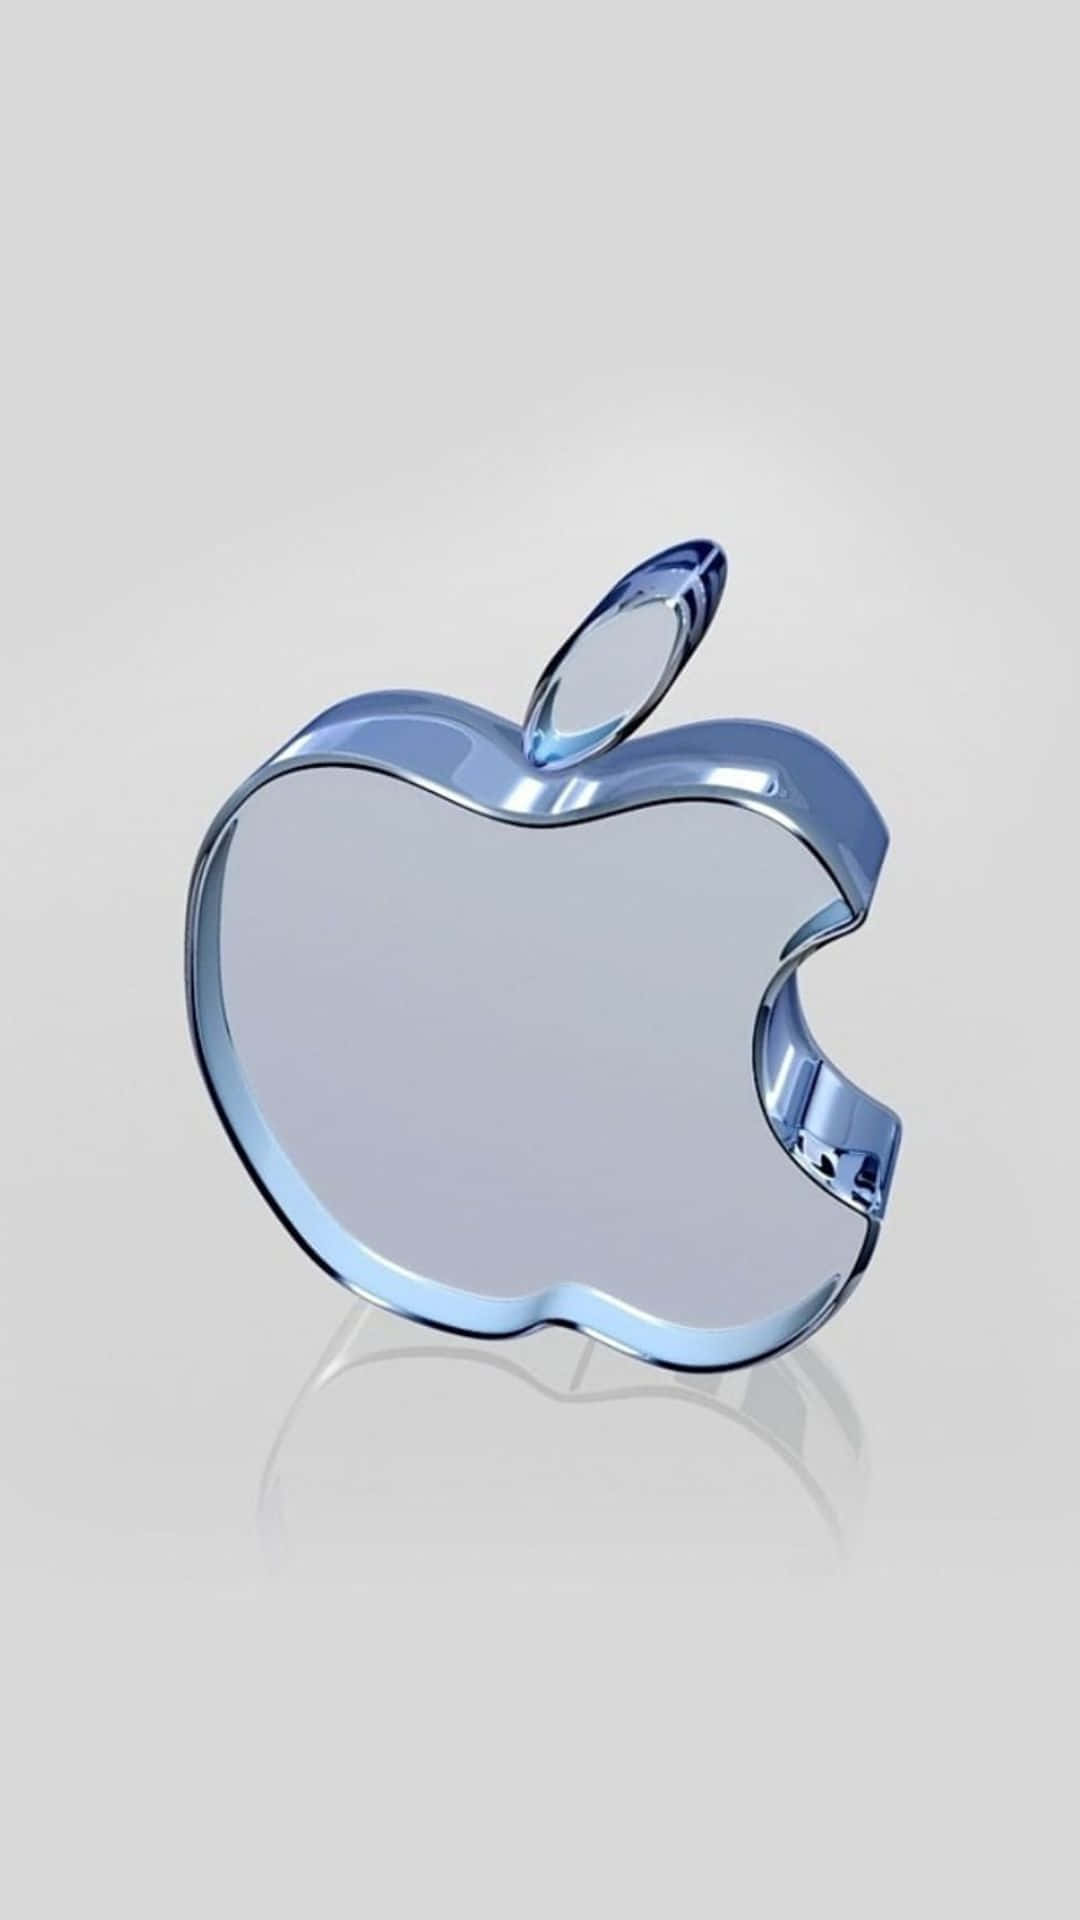 3d Pixel 3 Glass Apple Logo Background